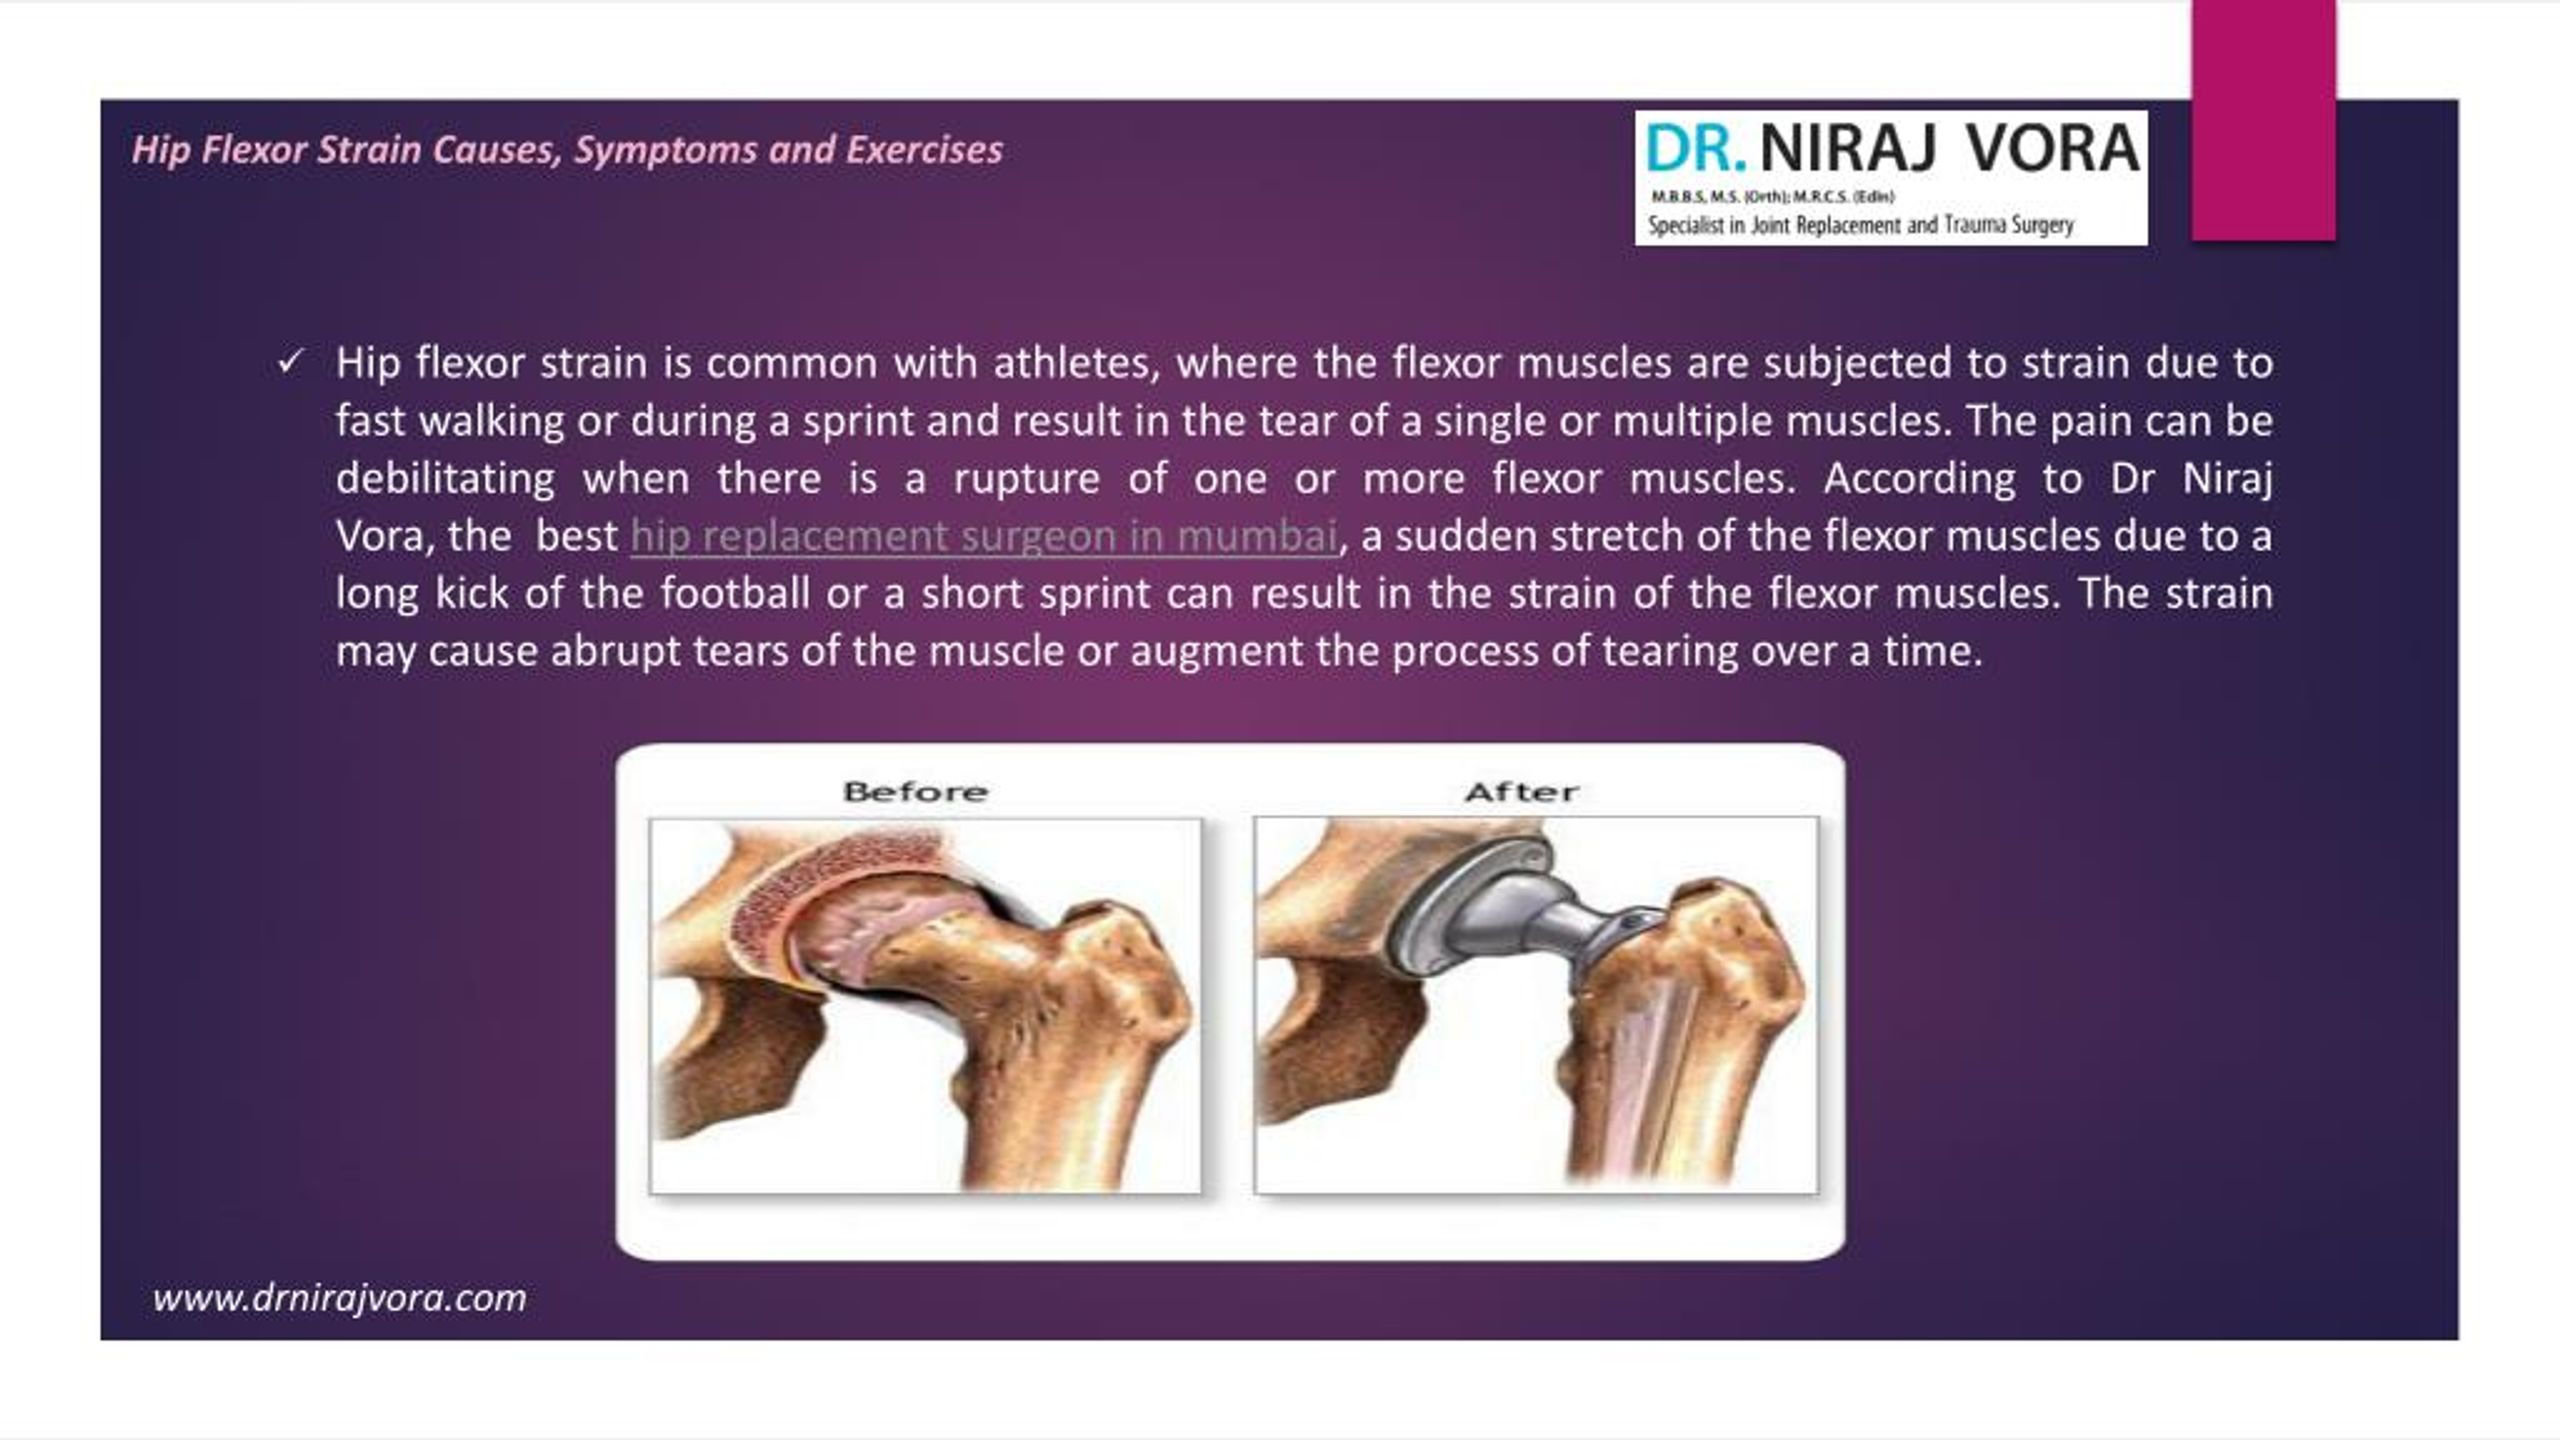 PPT - Symptoms for Hip Flexor Strain Causes By Dr. Niraj ...